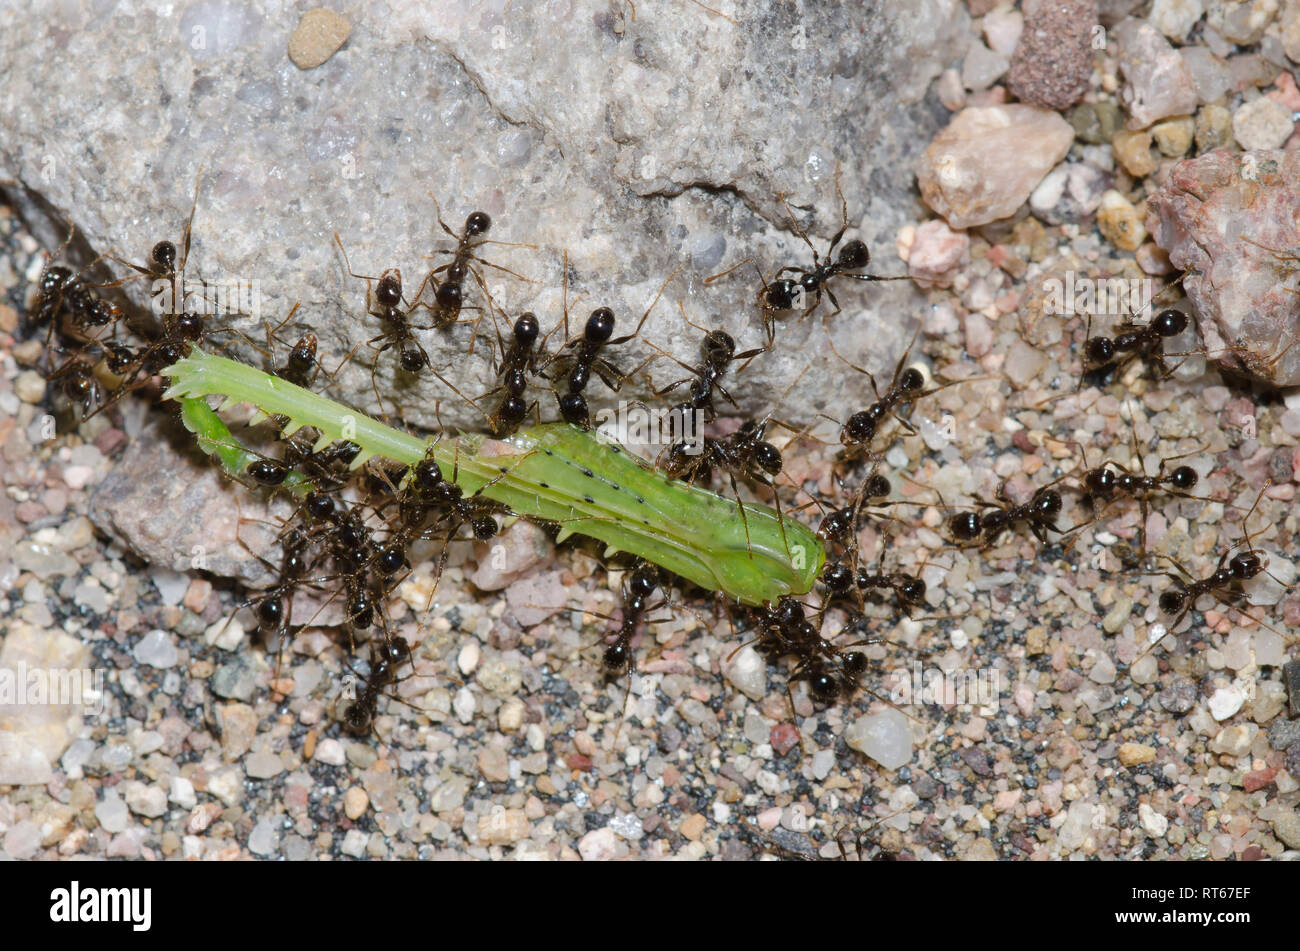 Big-headed Ants, Pheidole sp., hauling grasshopper leg Stock Photo